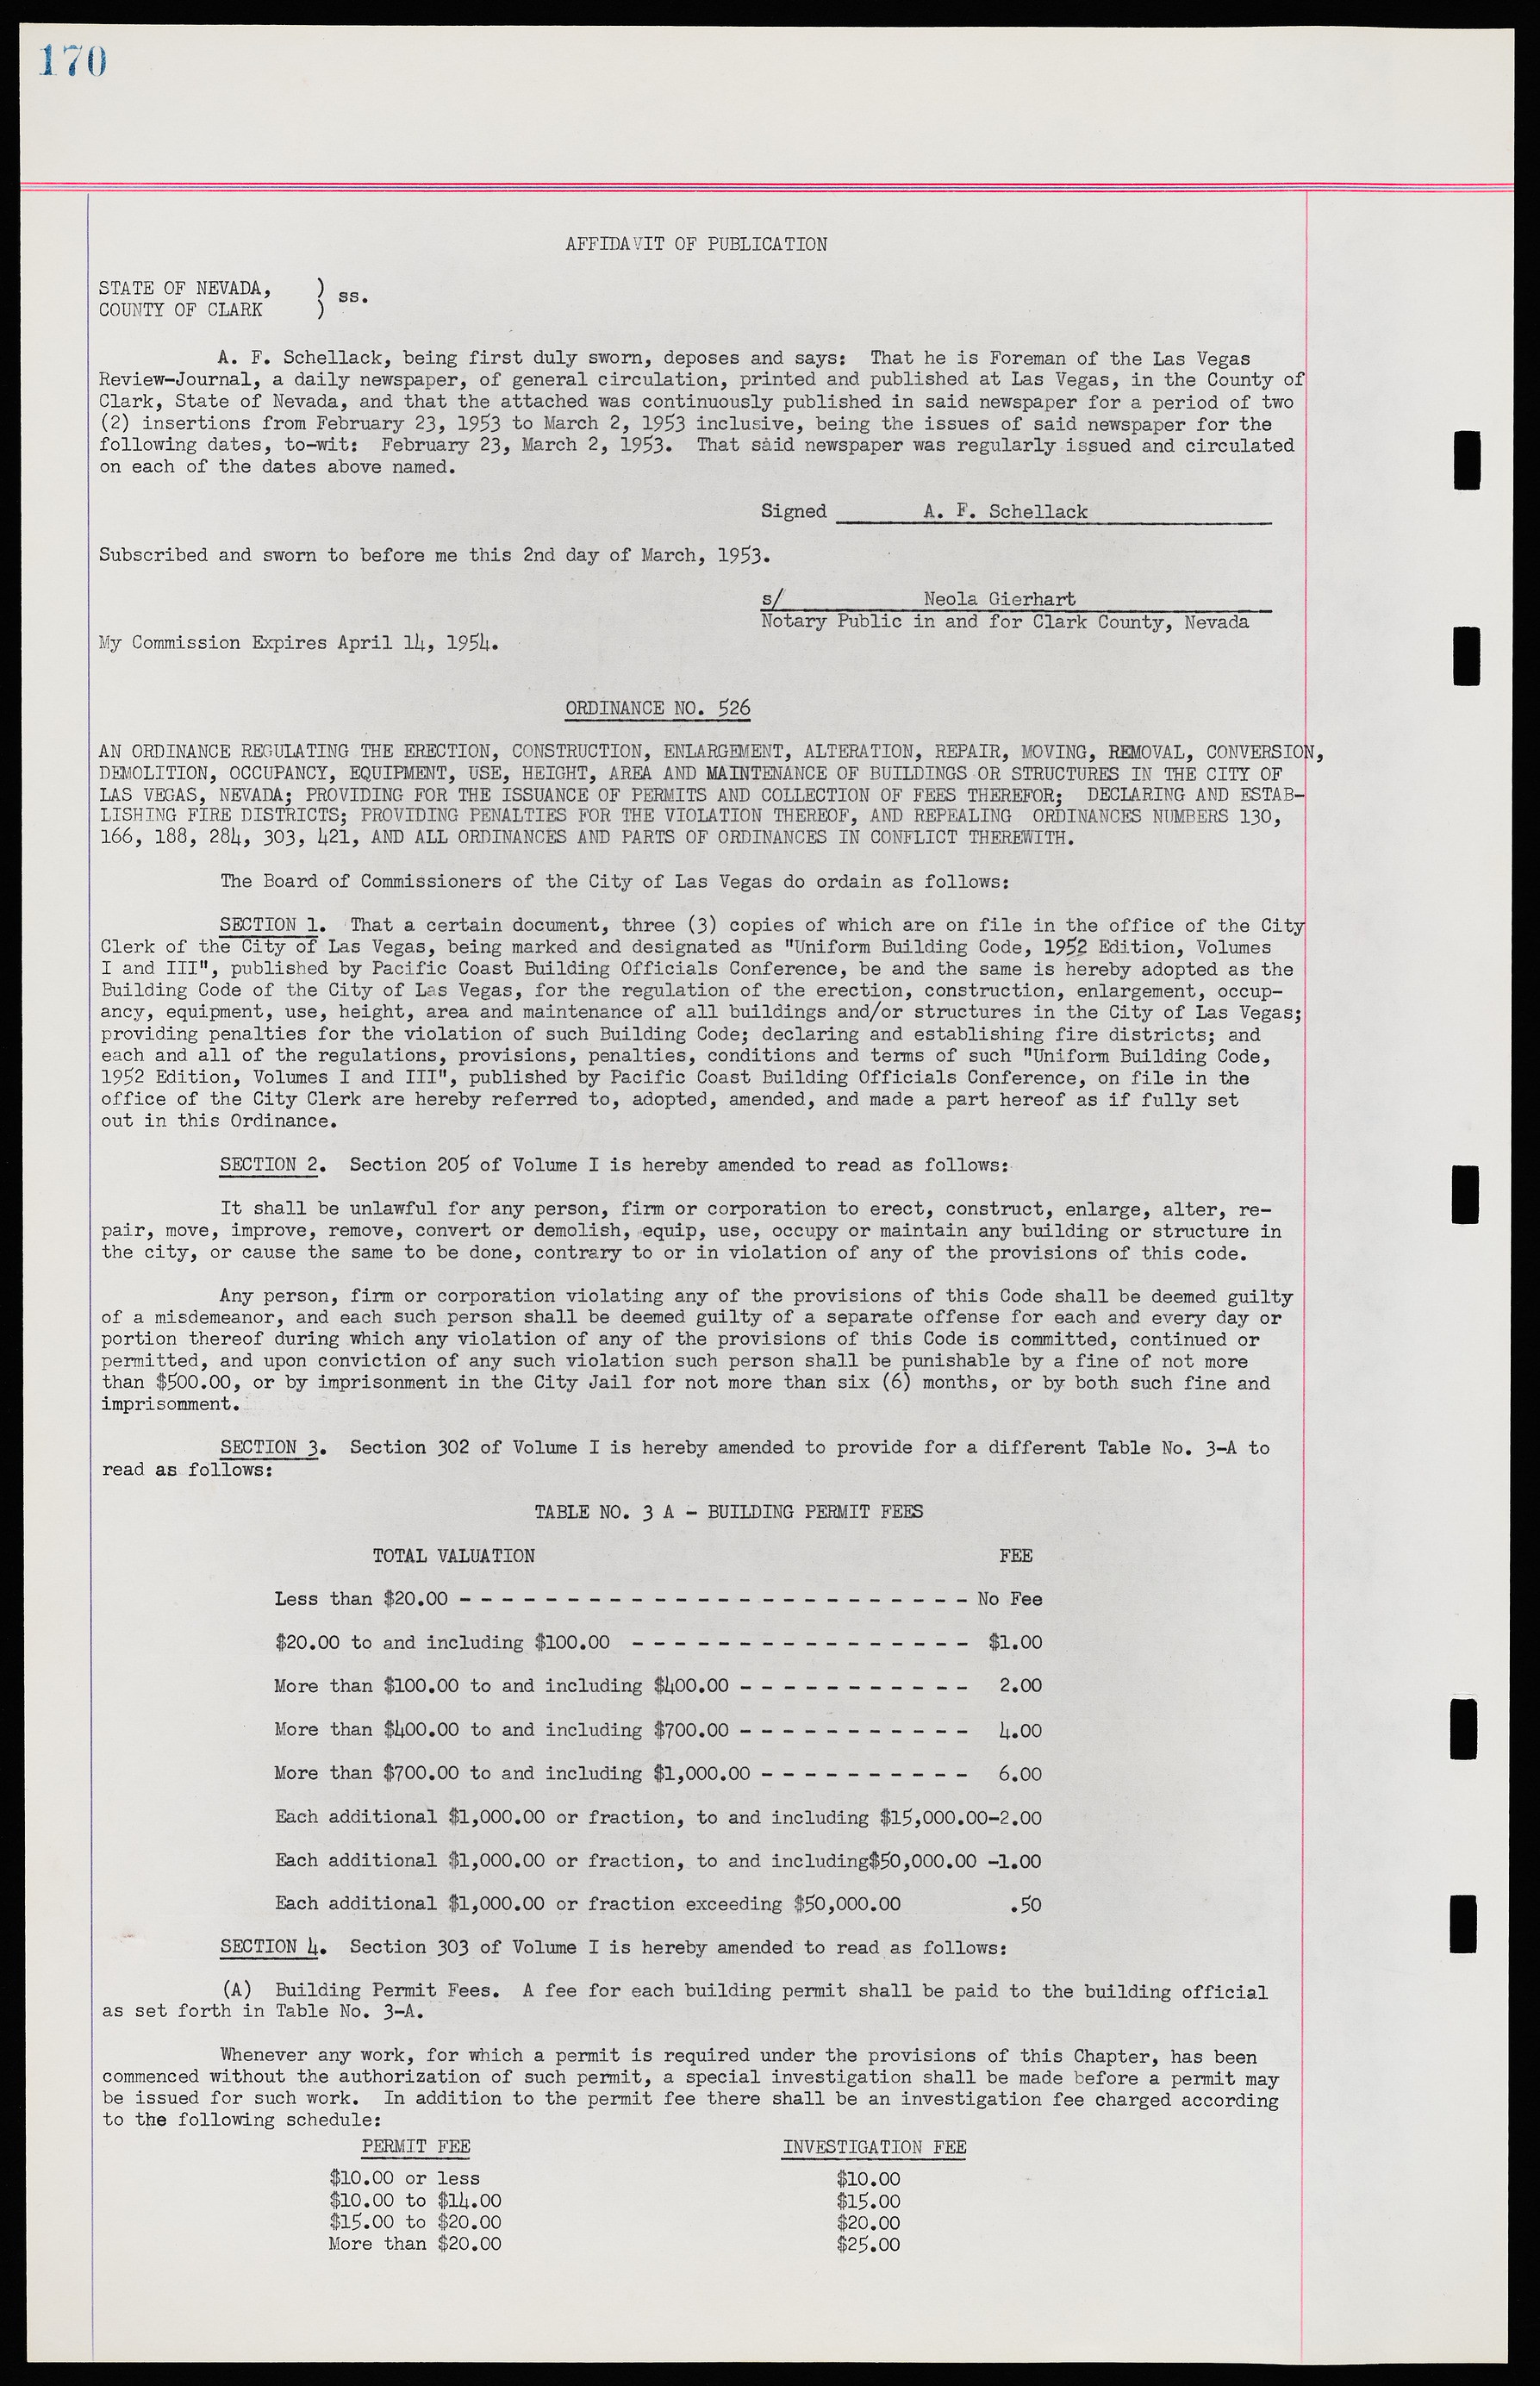 Las Vegas City Ordinances, November 13, 1950 to August 6, 1958, lvc000015-178